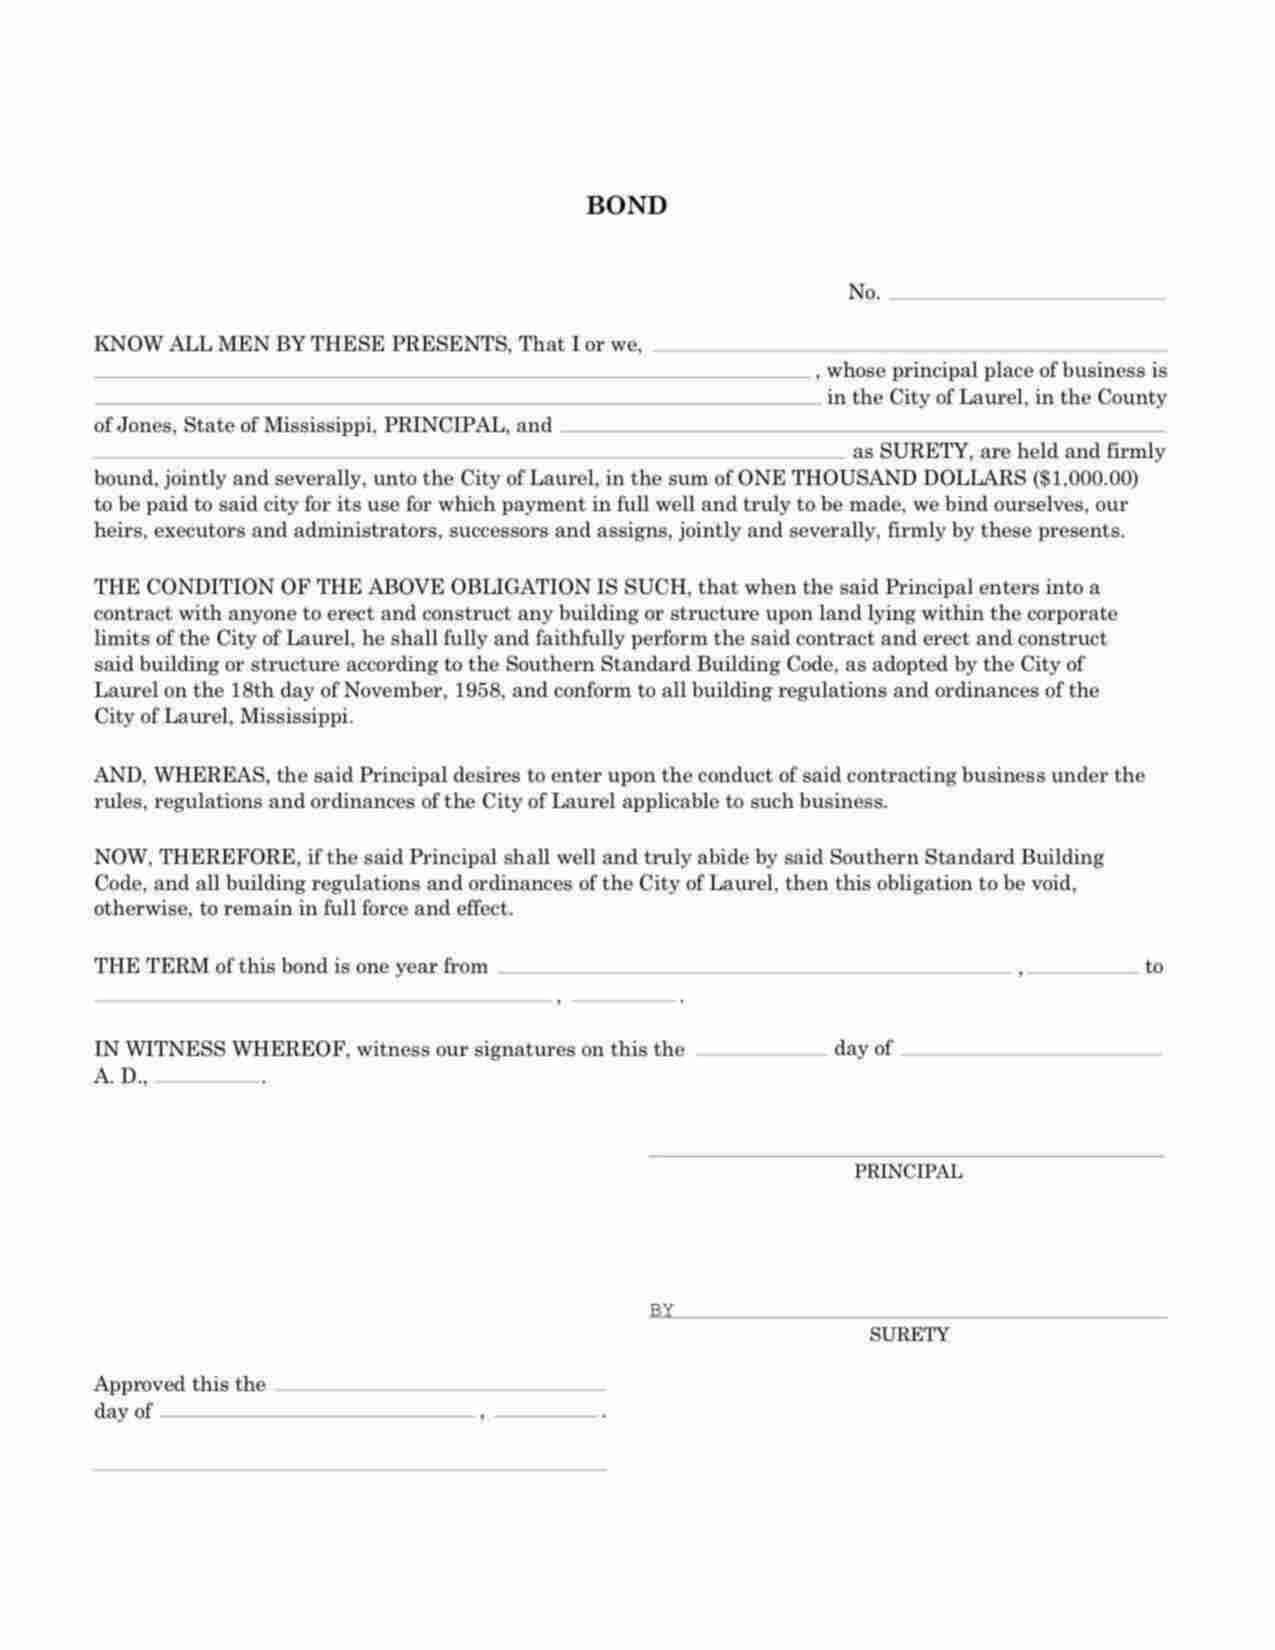 Mississippi Contractor's License/Permit Bond Form